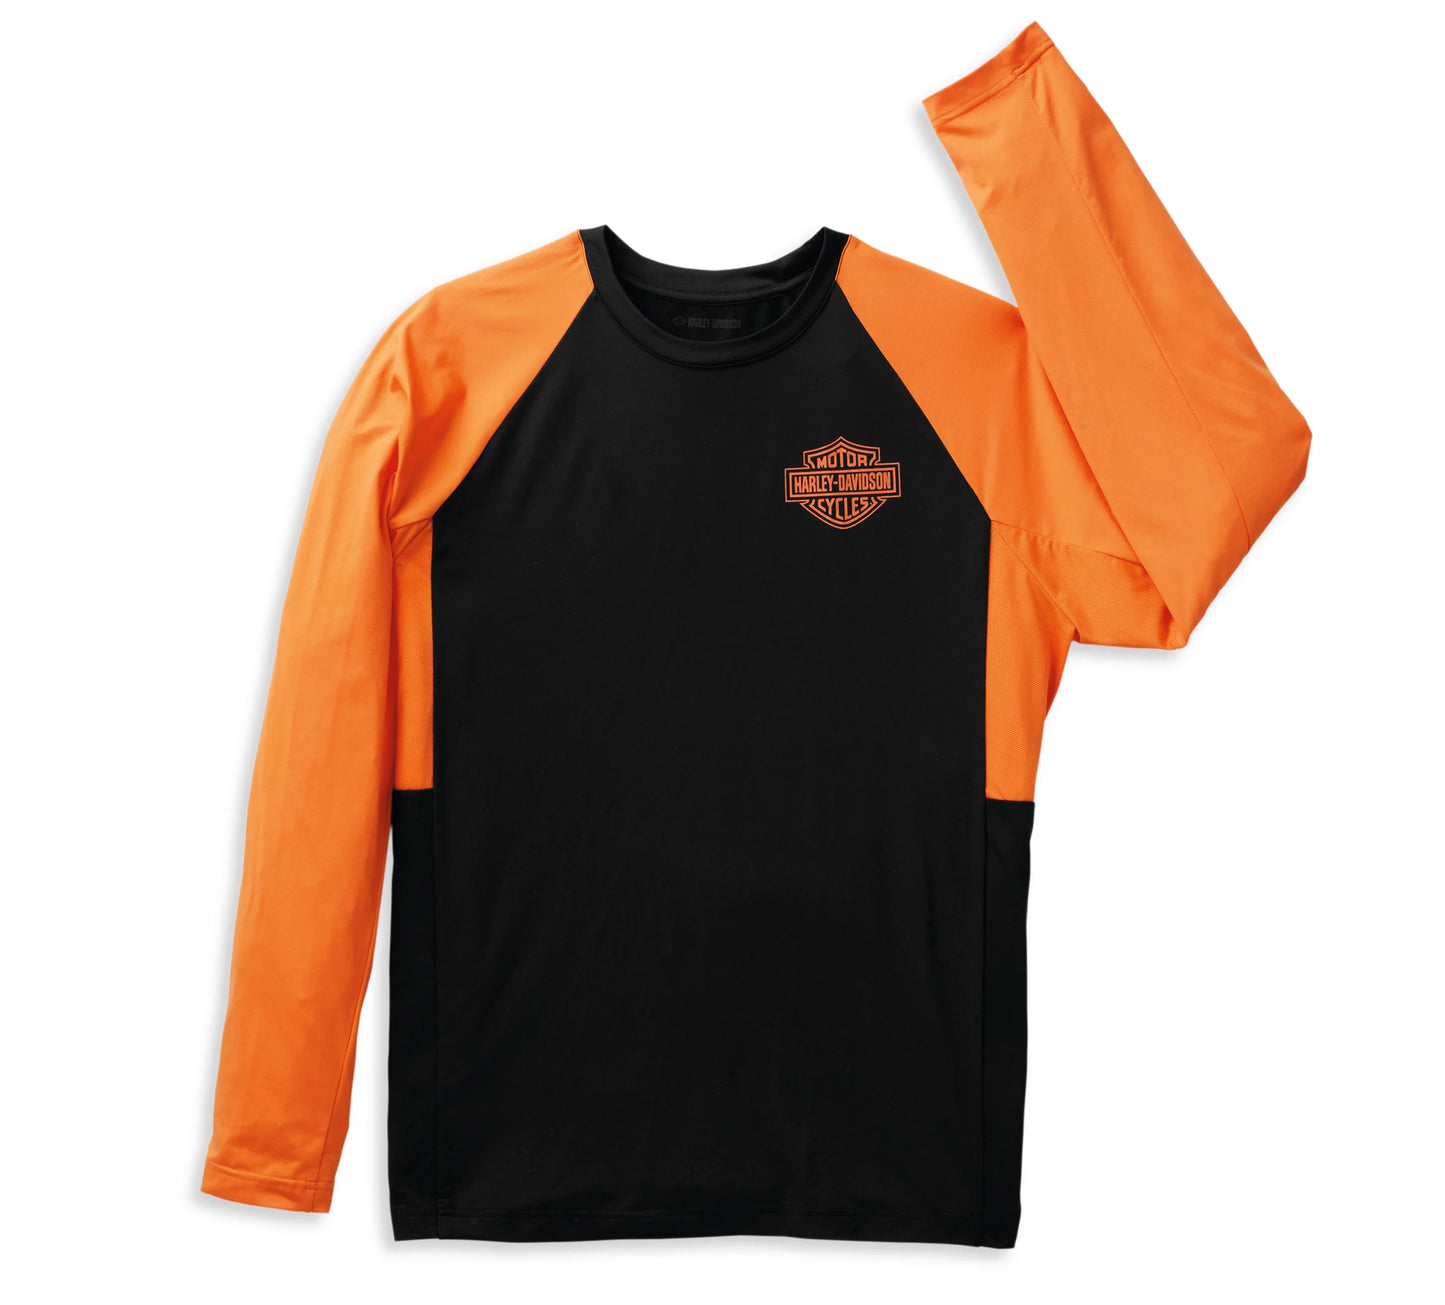 Harley-Davidson® Men's Performance B&S Colorblocked Shirt - Black 99052-22VM